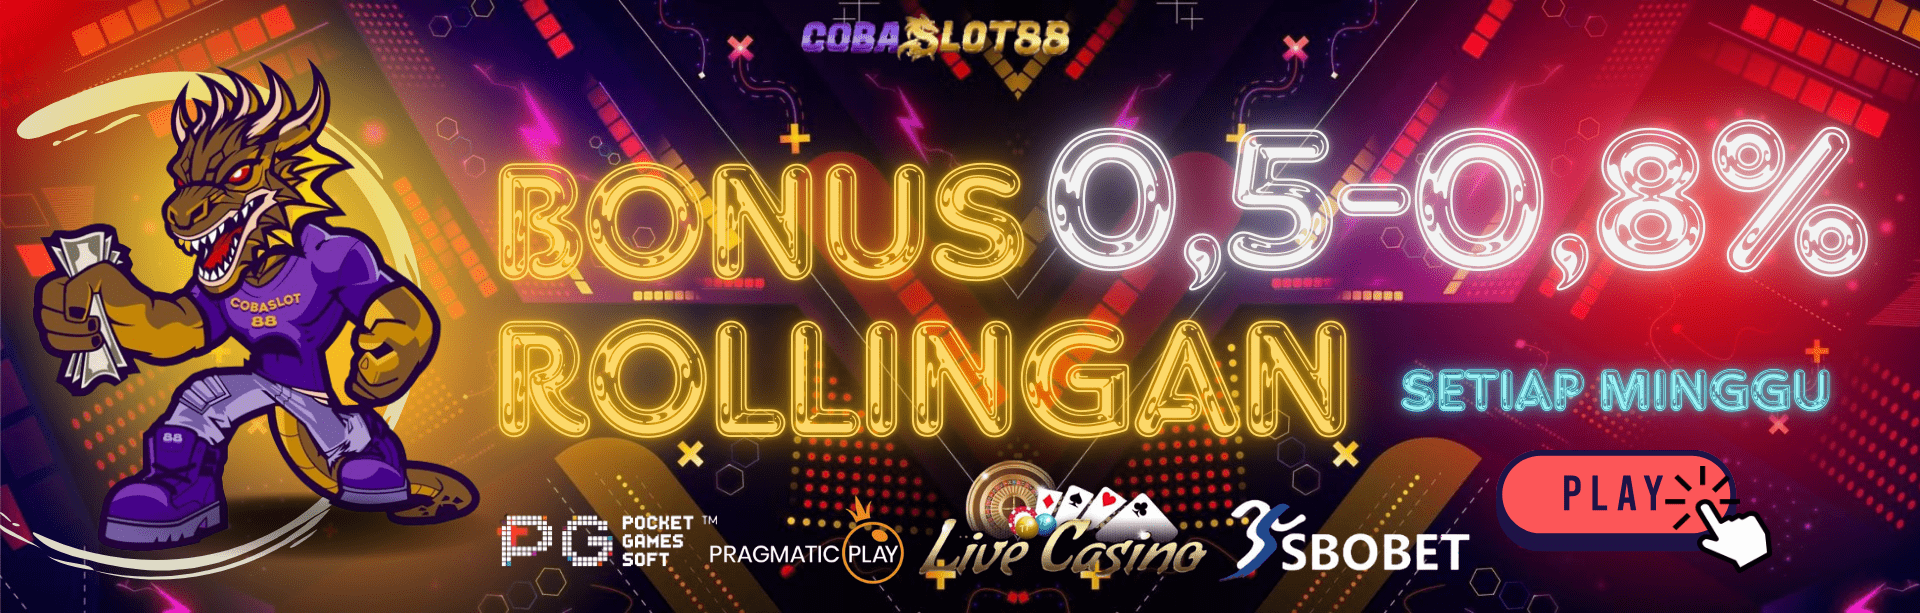 BONUS ROLLINGAN LIVE CASINO 0.8% | 0.5% GAME SLOT ONLINE & POKER